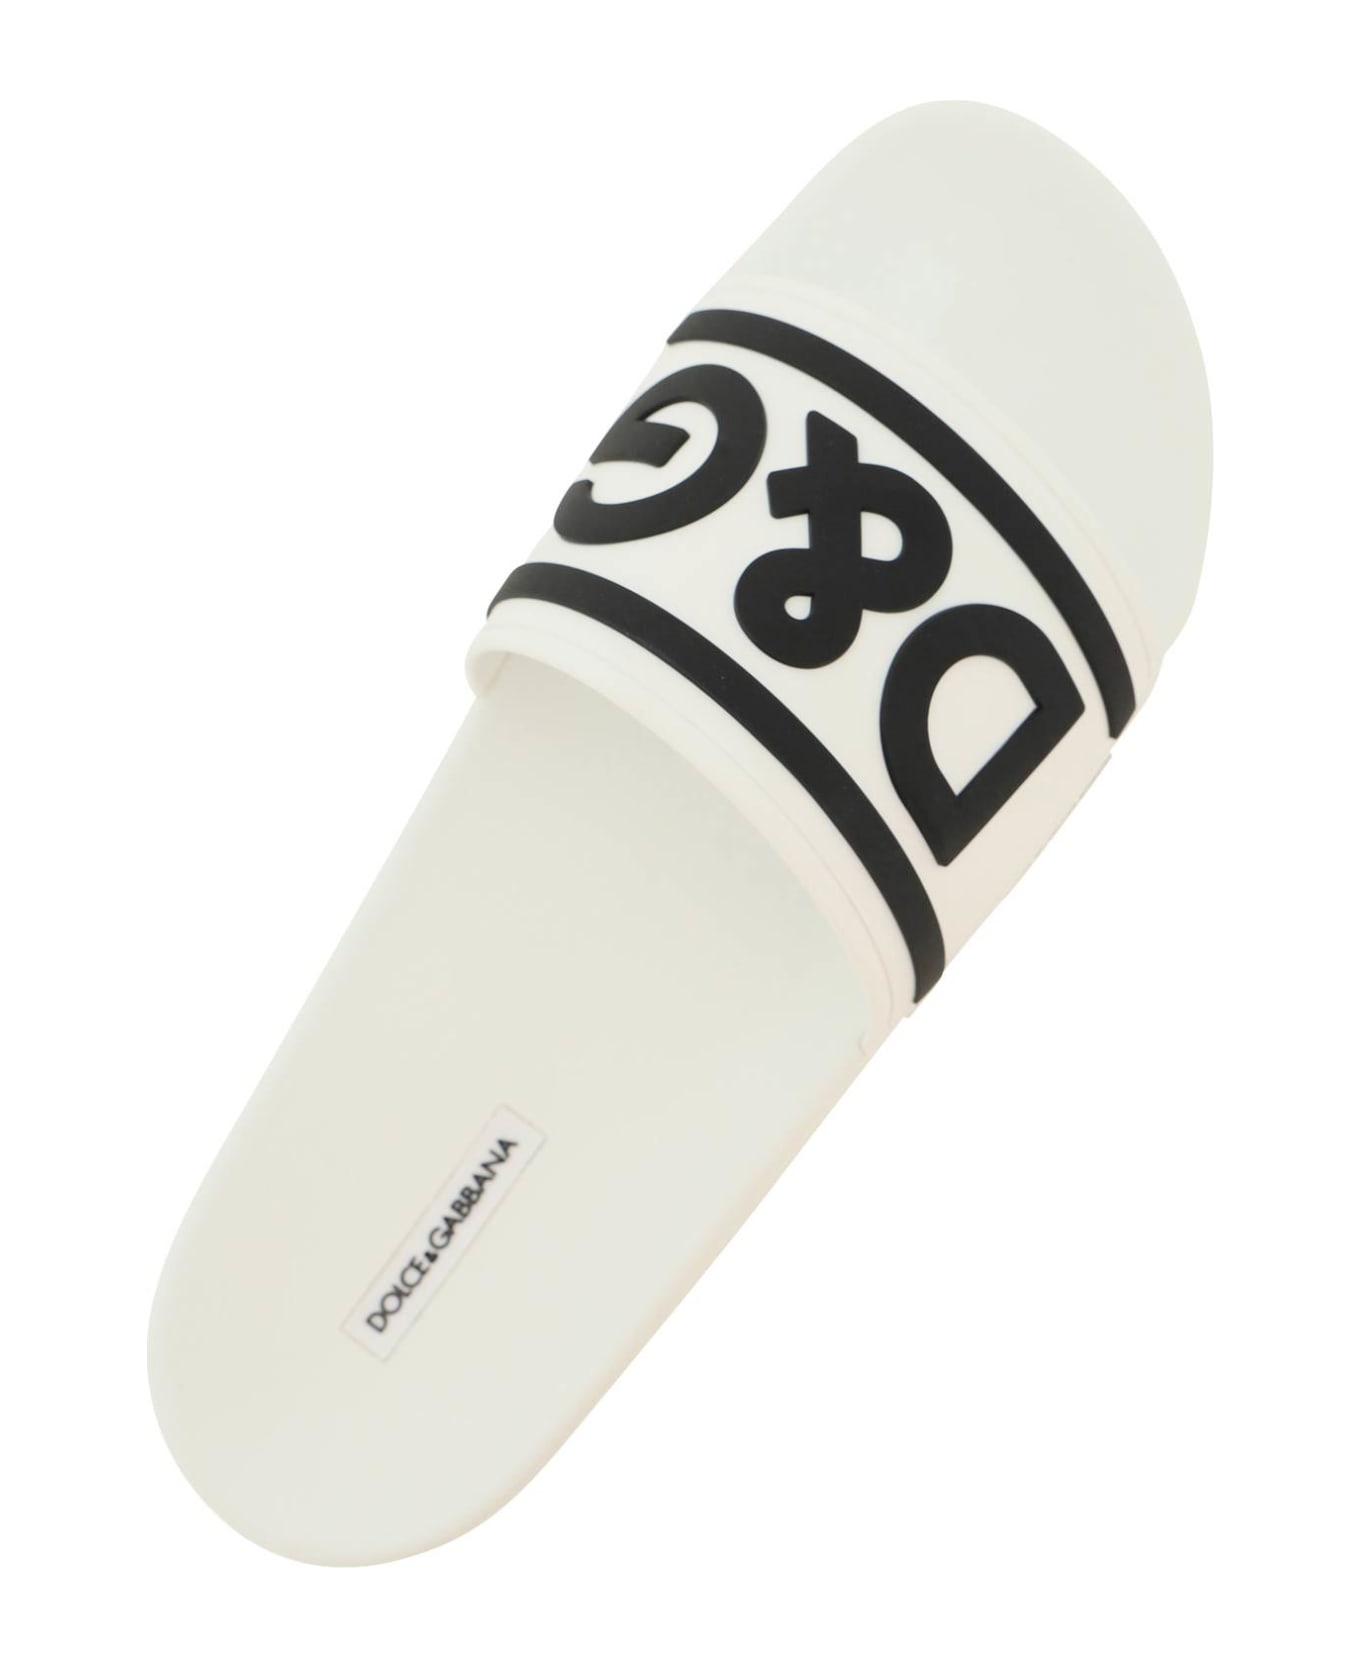 Dolce & Gabbana Logo Rubber Slides - White その他各種シューズ